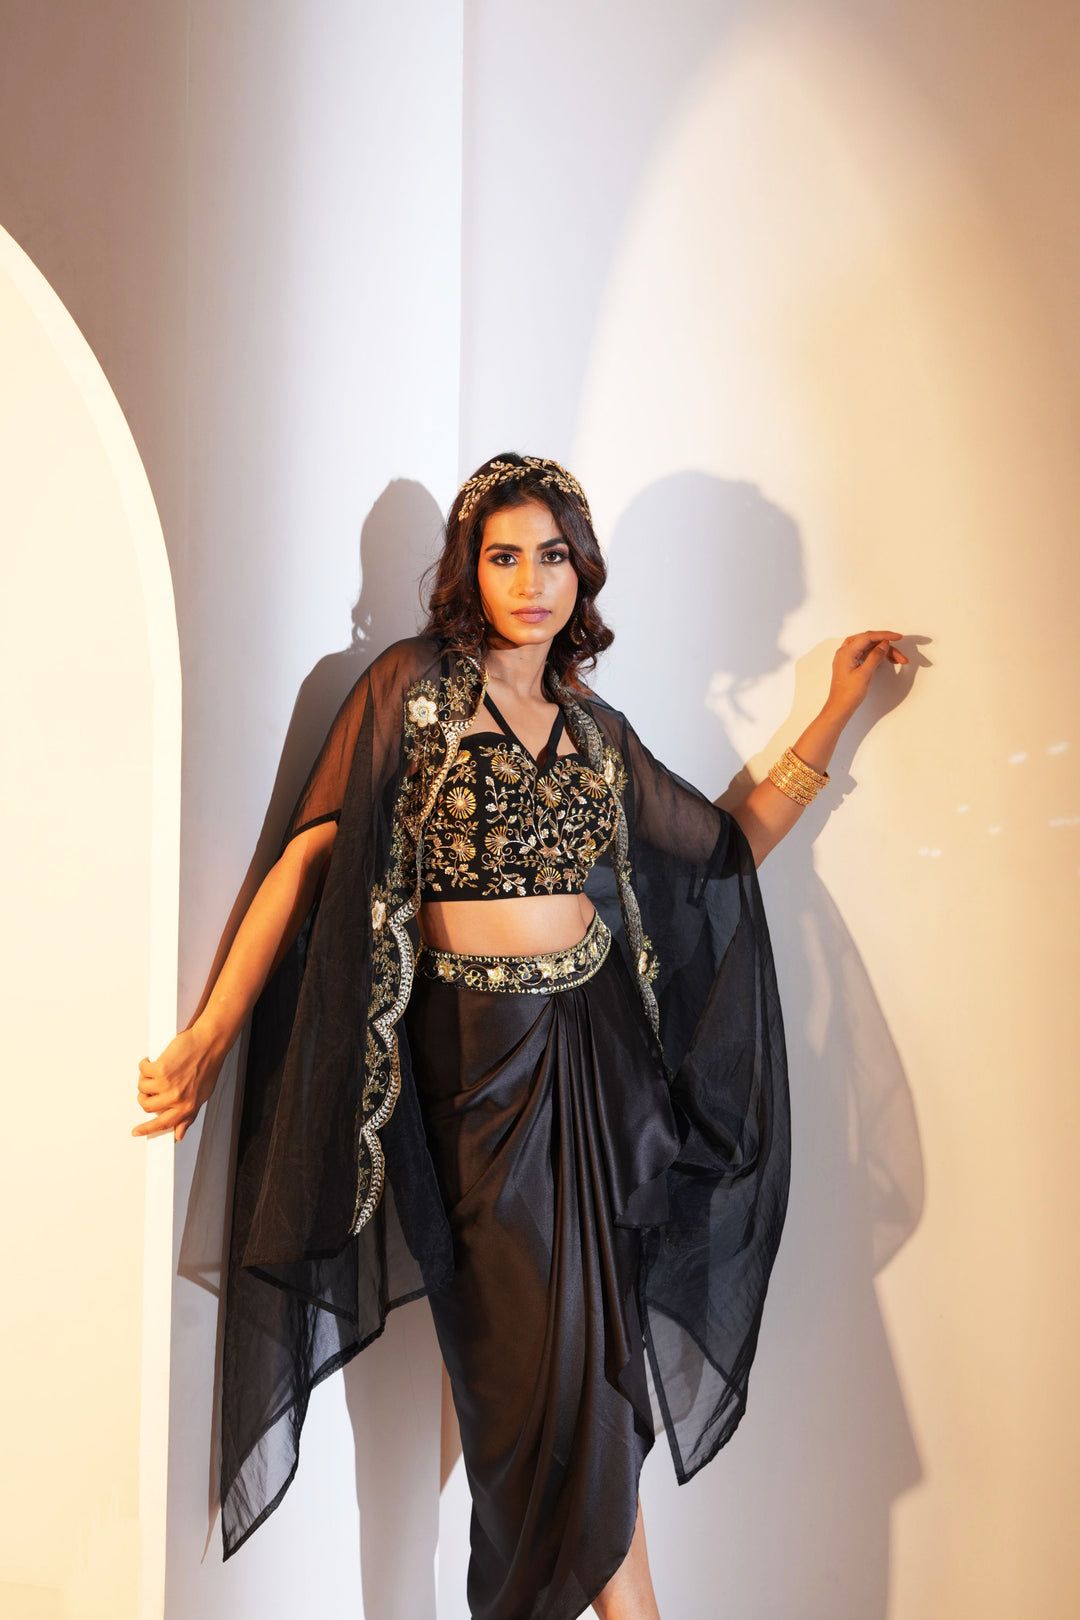 Rashika Sharma's Black and gold unique outfit - Rent